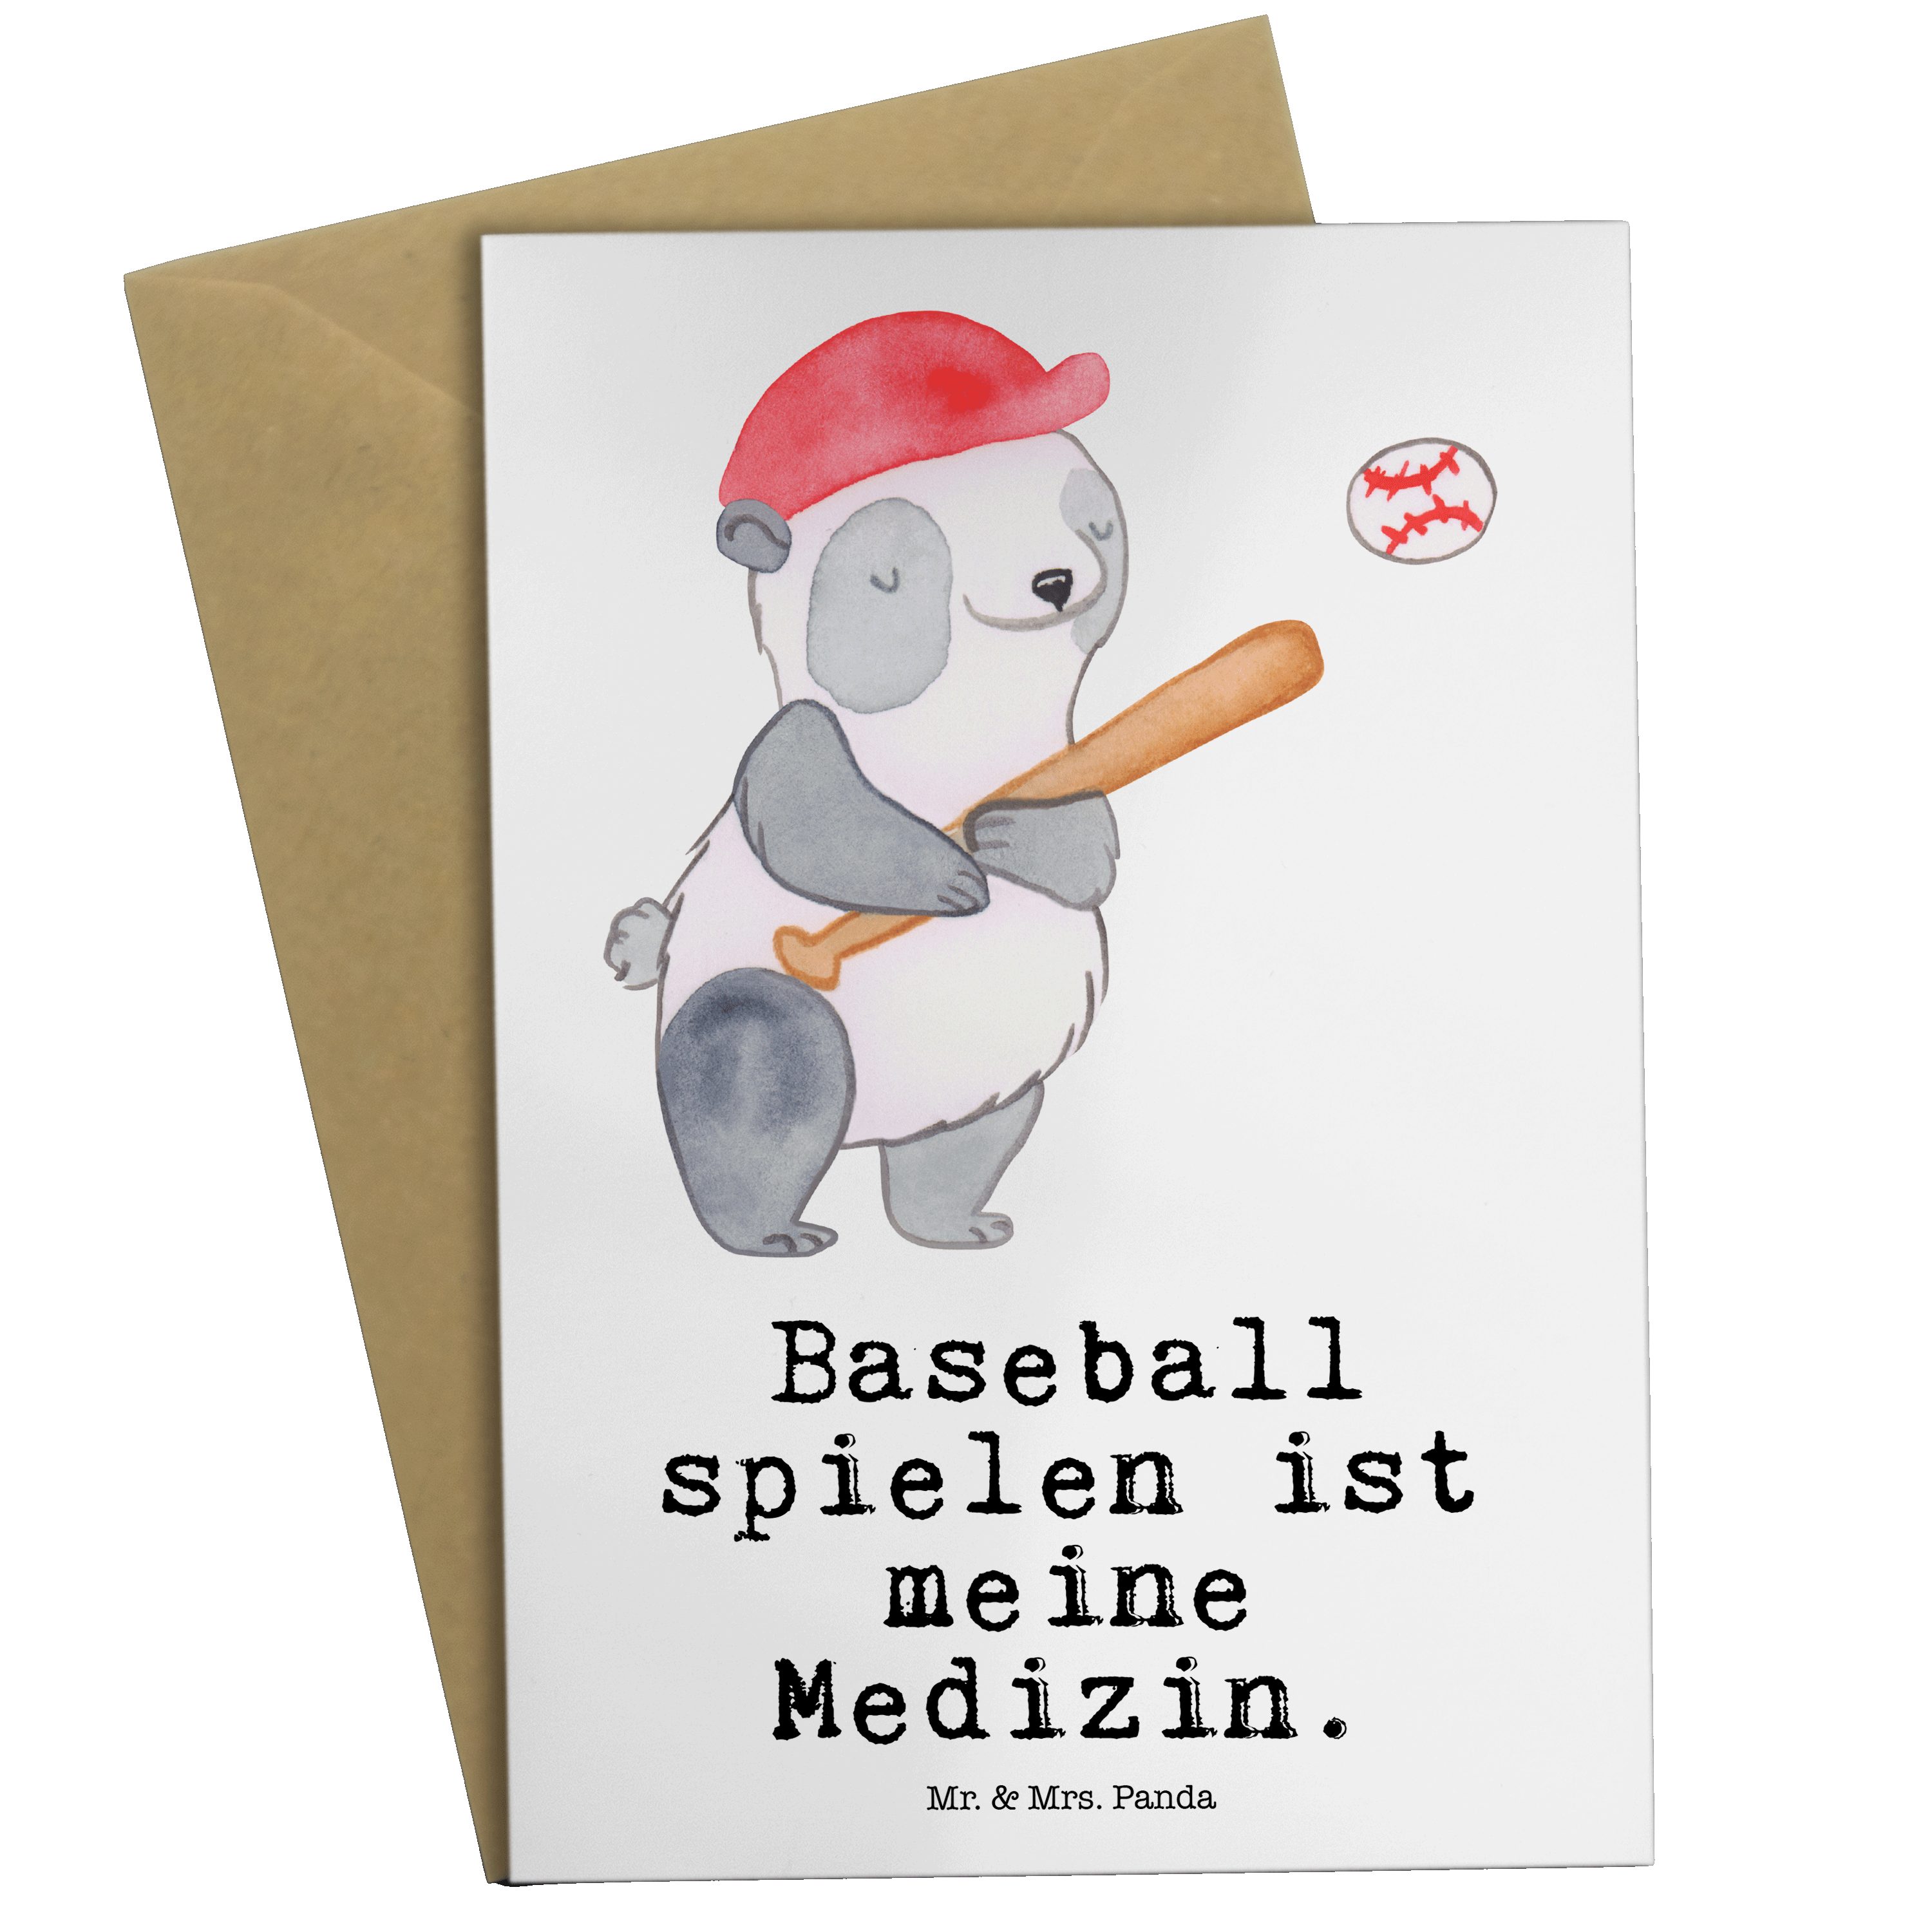 Mr. & Mrs. Panda Grußkarte Panda Baseball spielen Medizin - Weiß - Geschenk, Glückwunschkarte, K